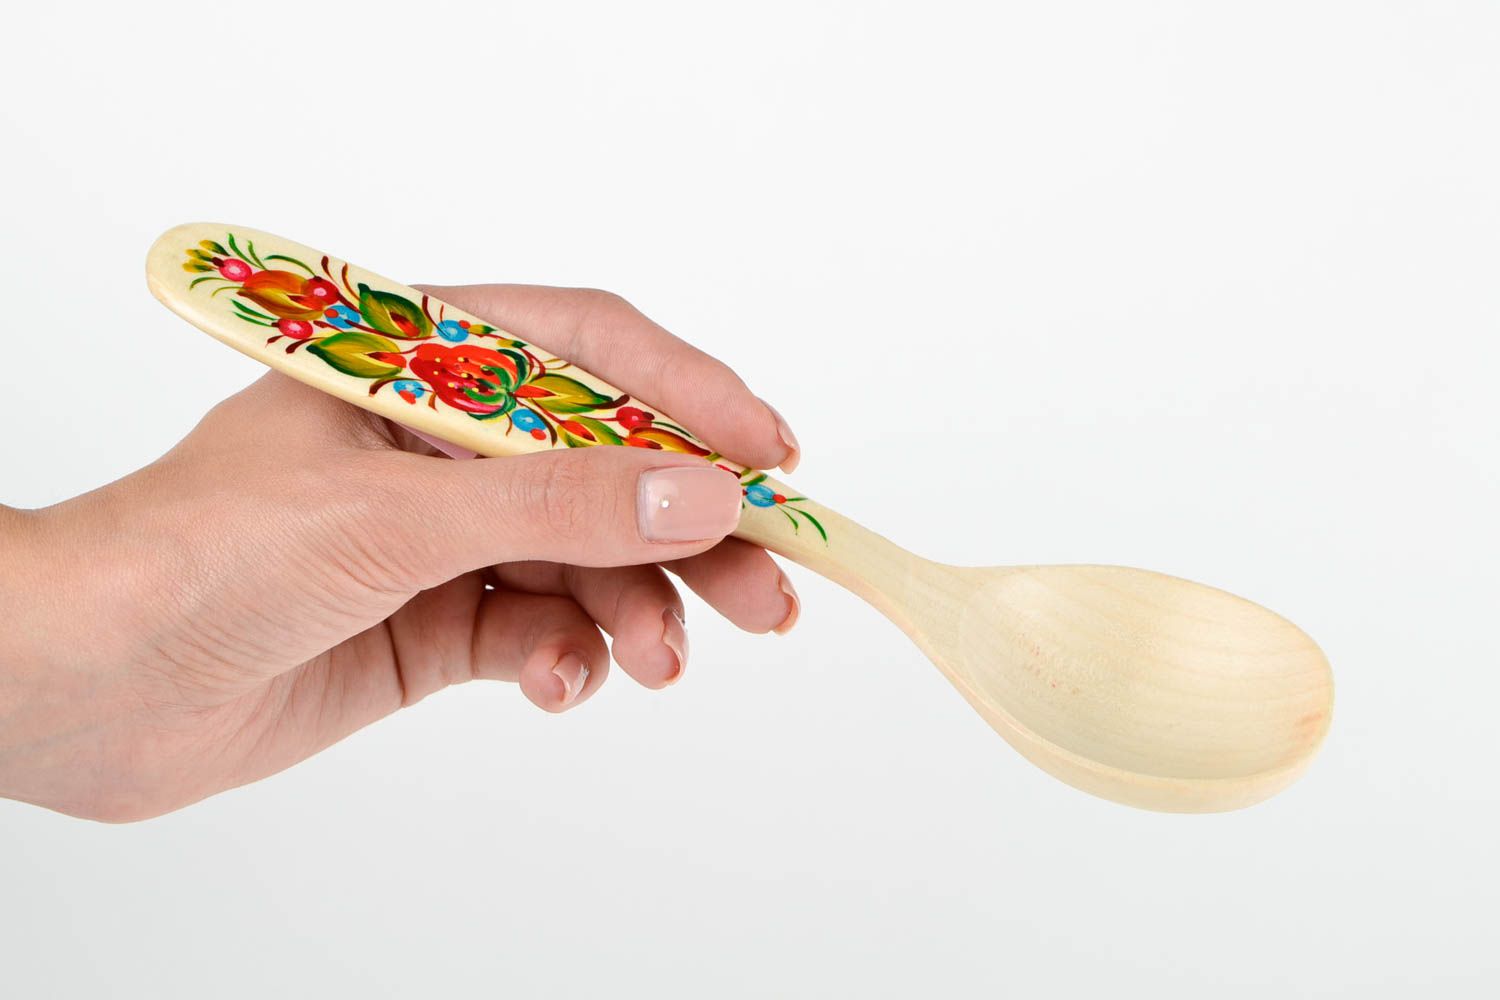 Handmade spoon unusual spoon for kitchen decor decor ideas unusual gift photo 2